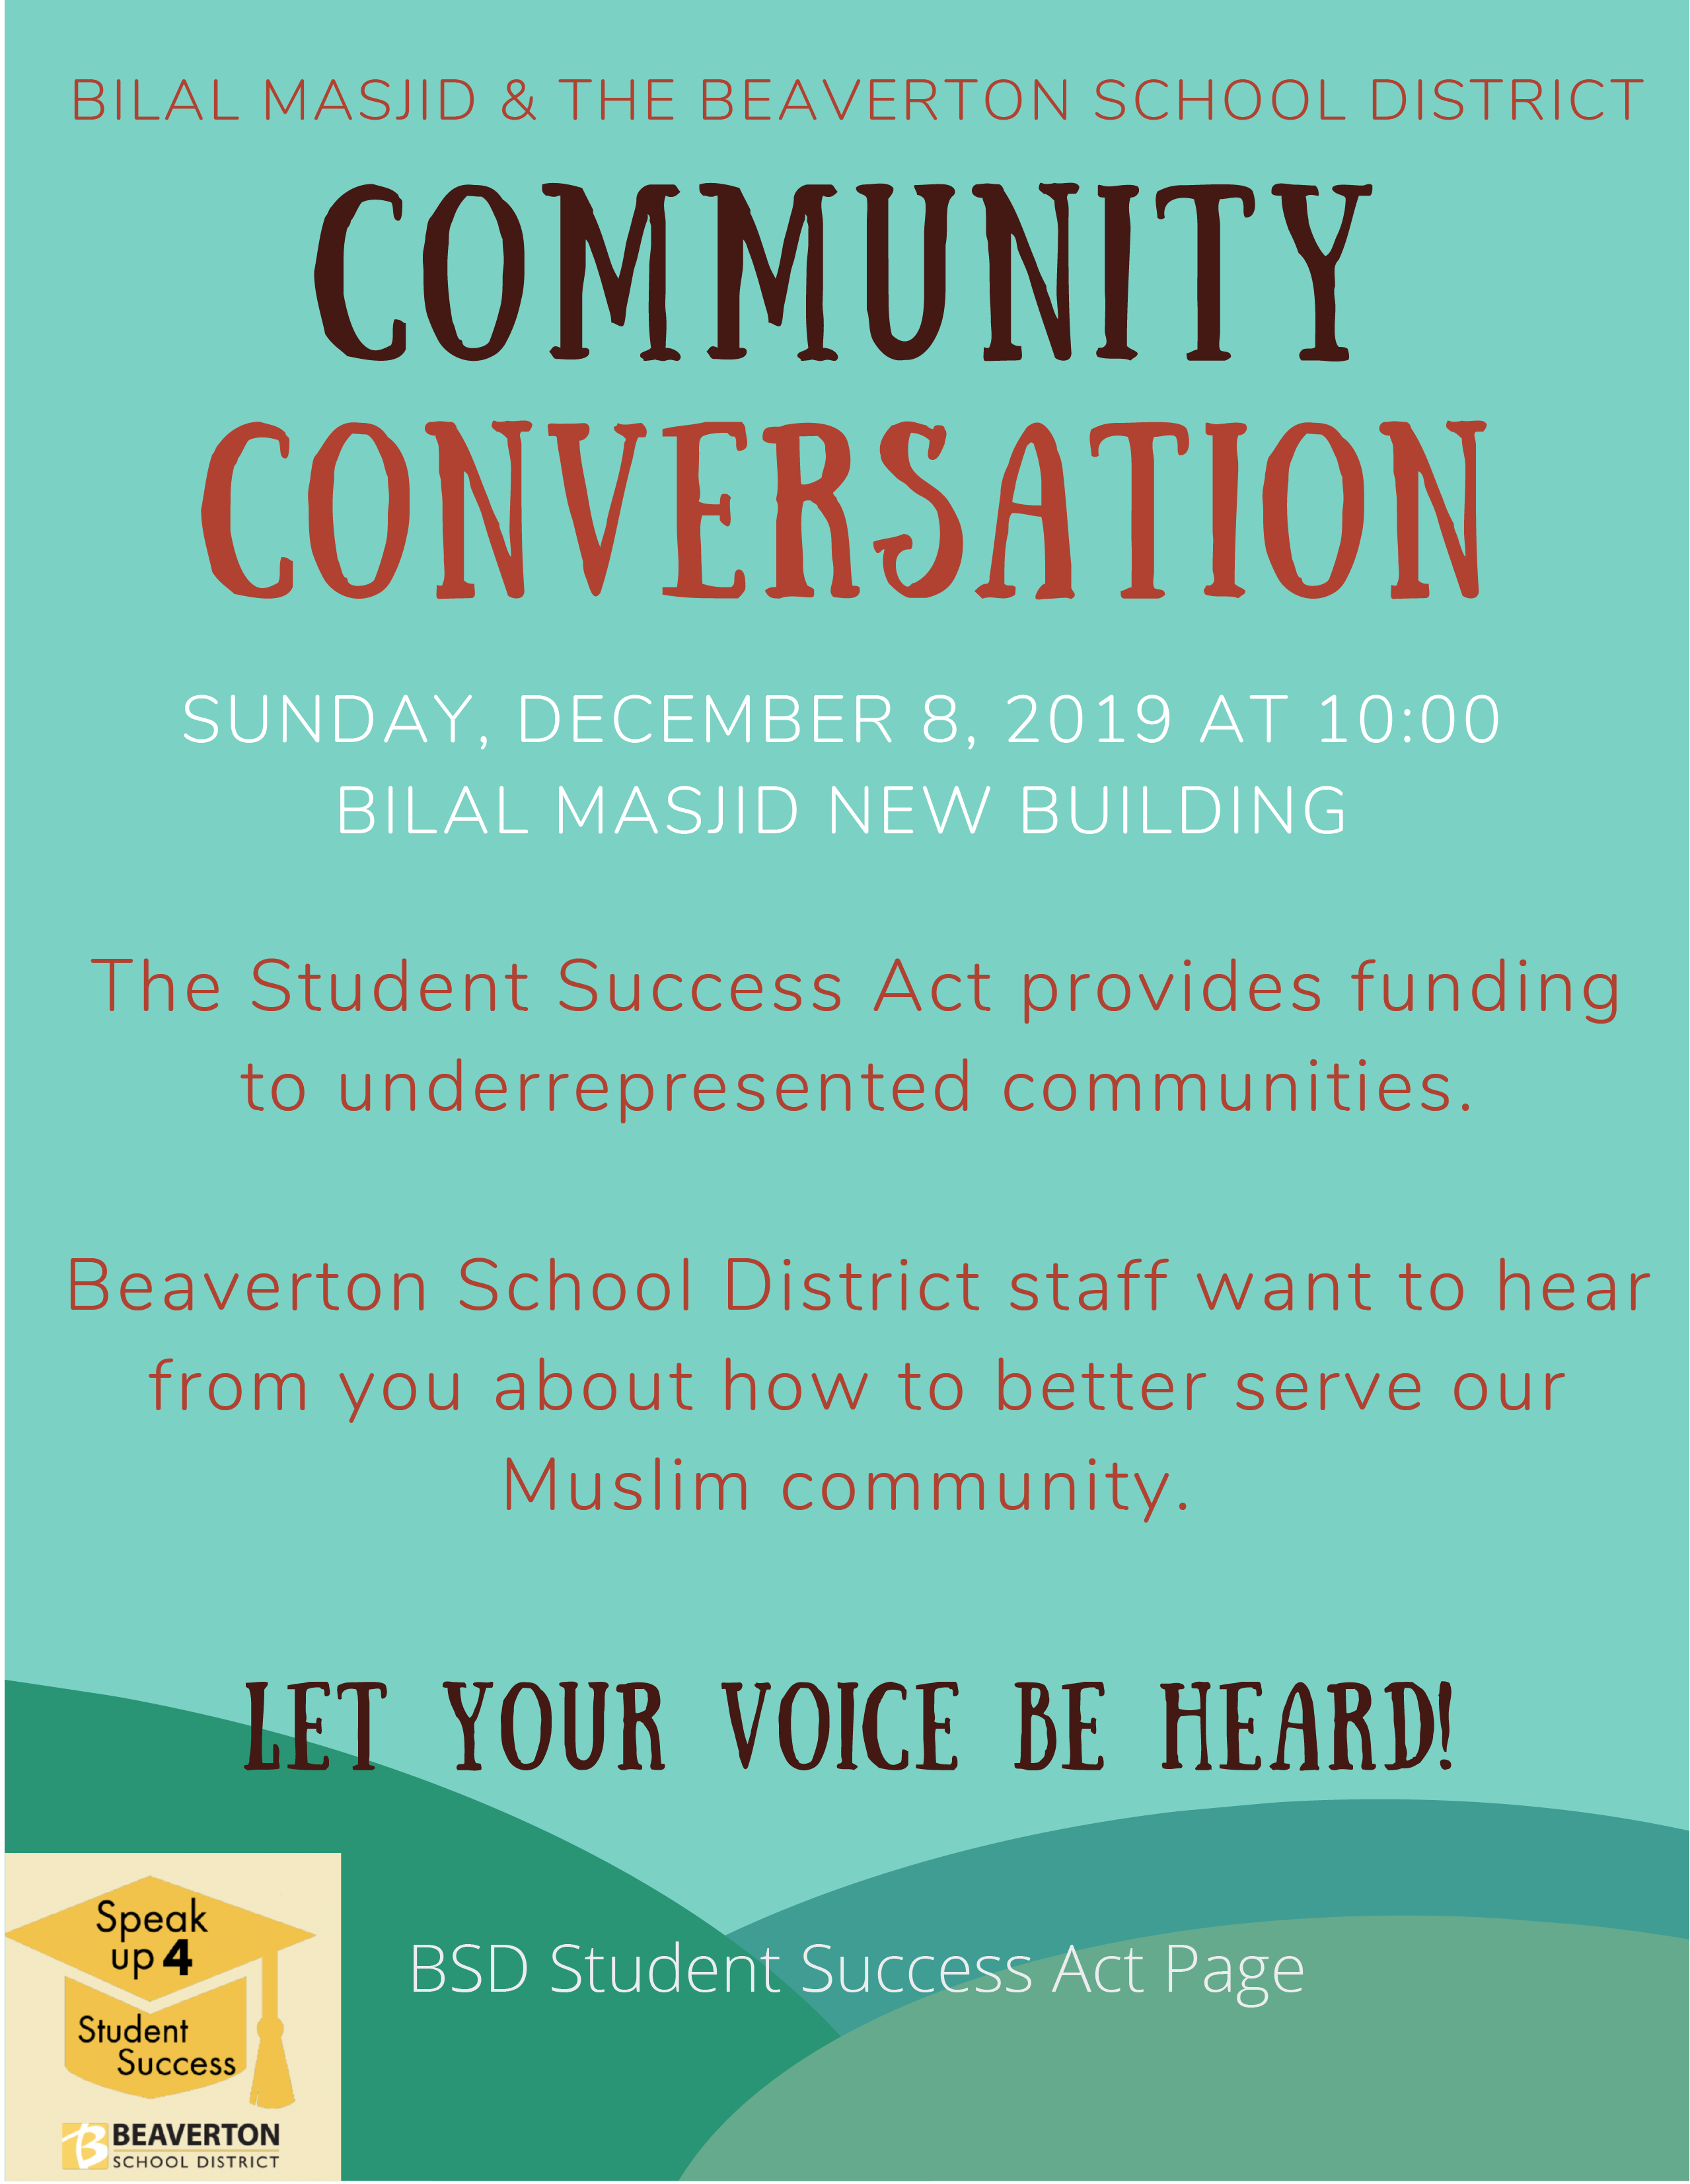 COMMUNITY CONVERSATION with BEAVERTON SCHOOL DISTRICT